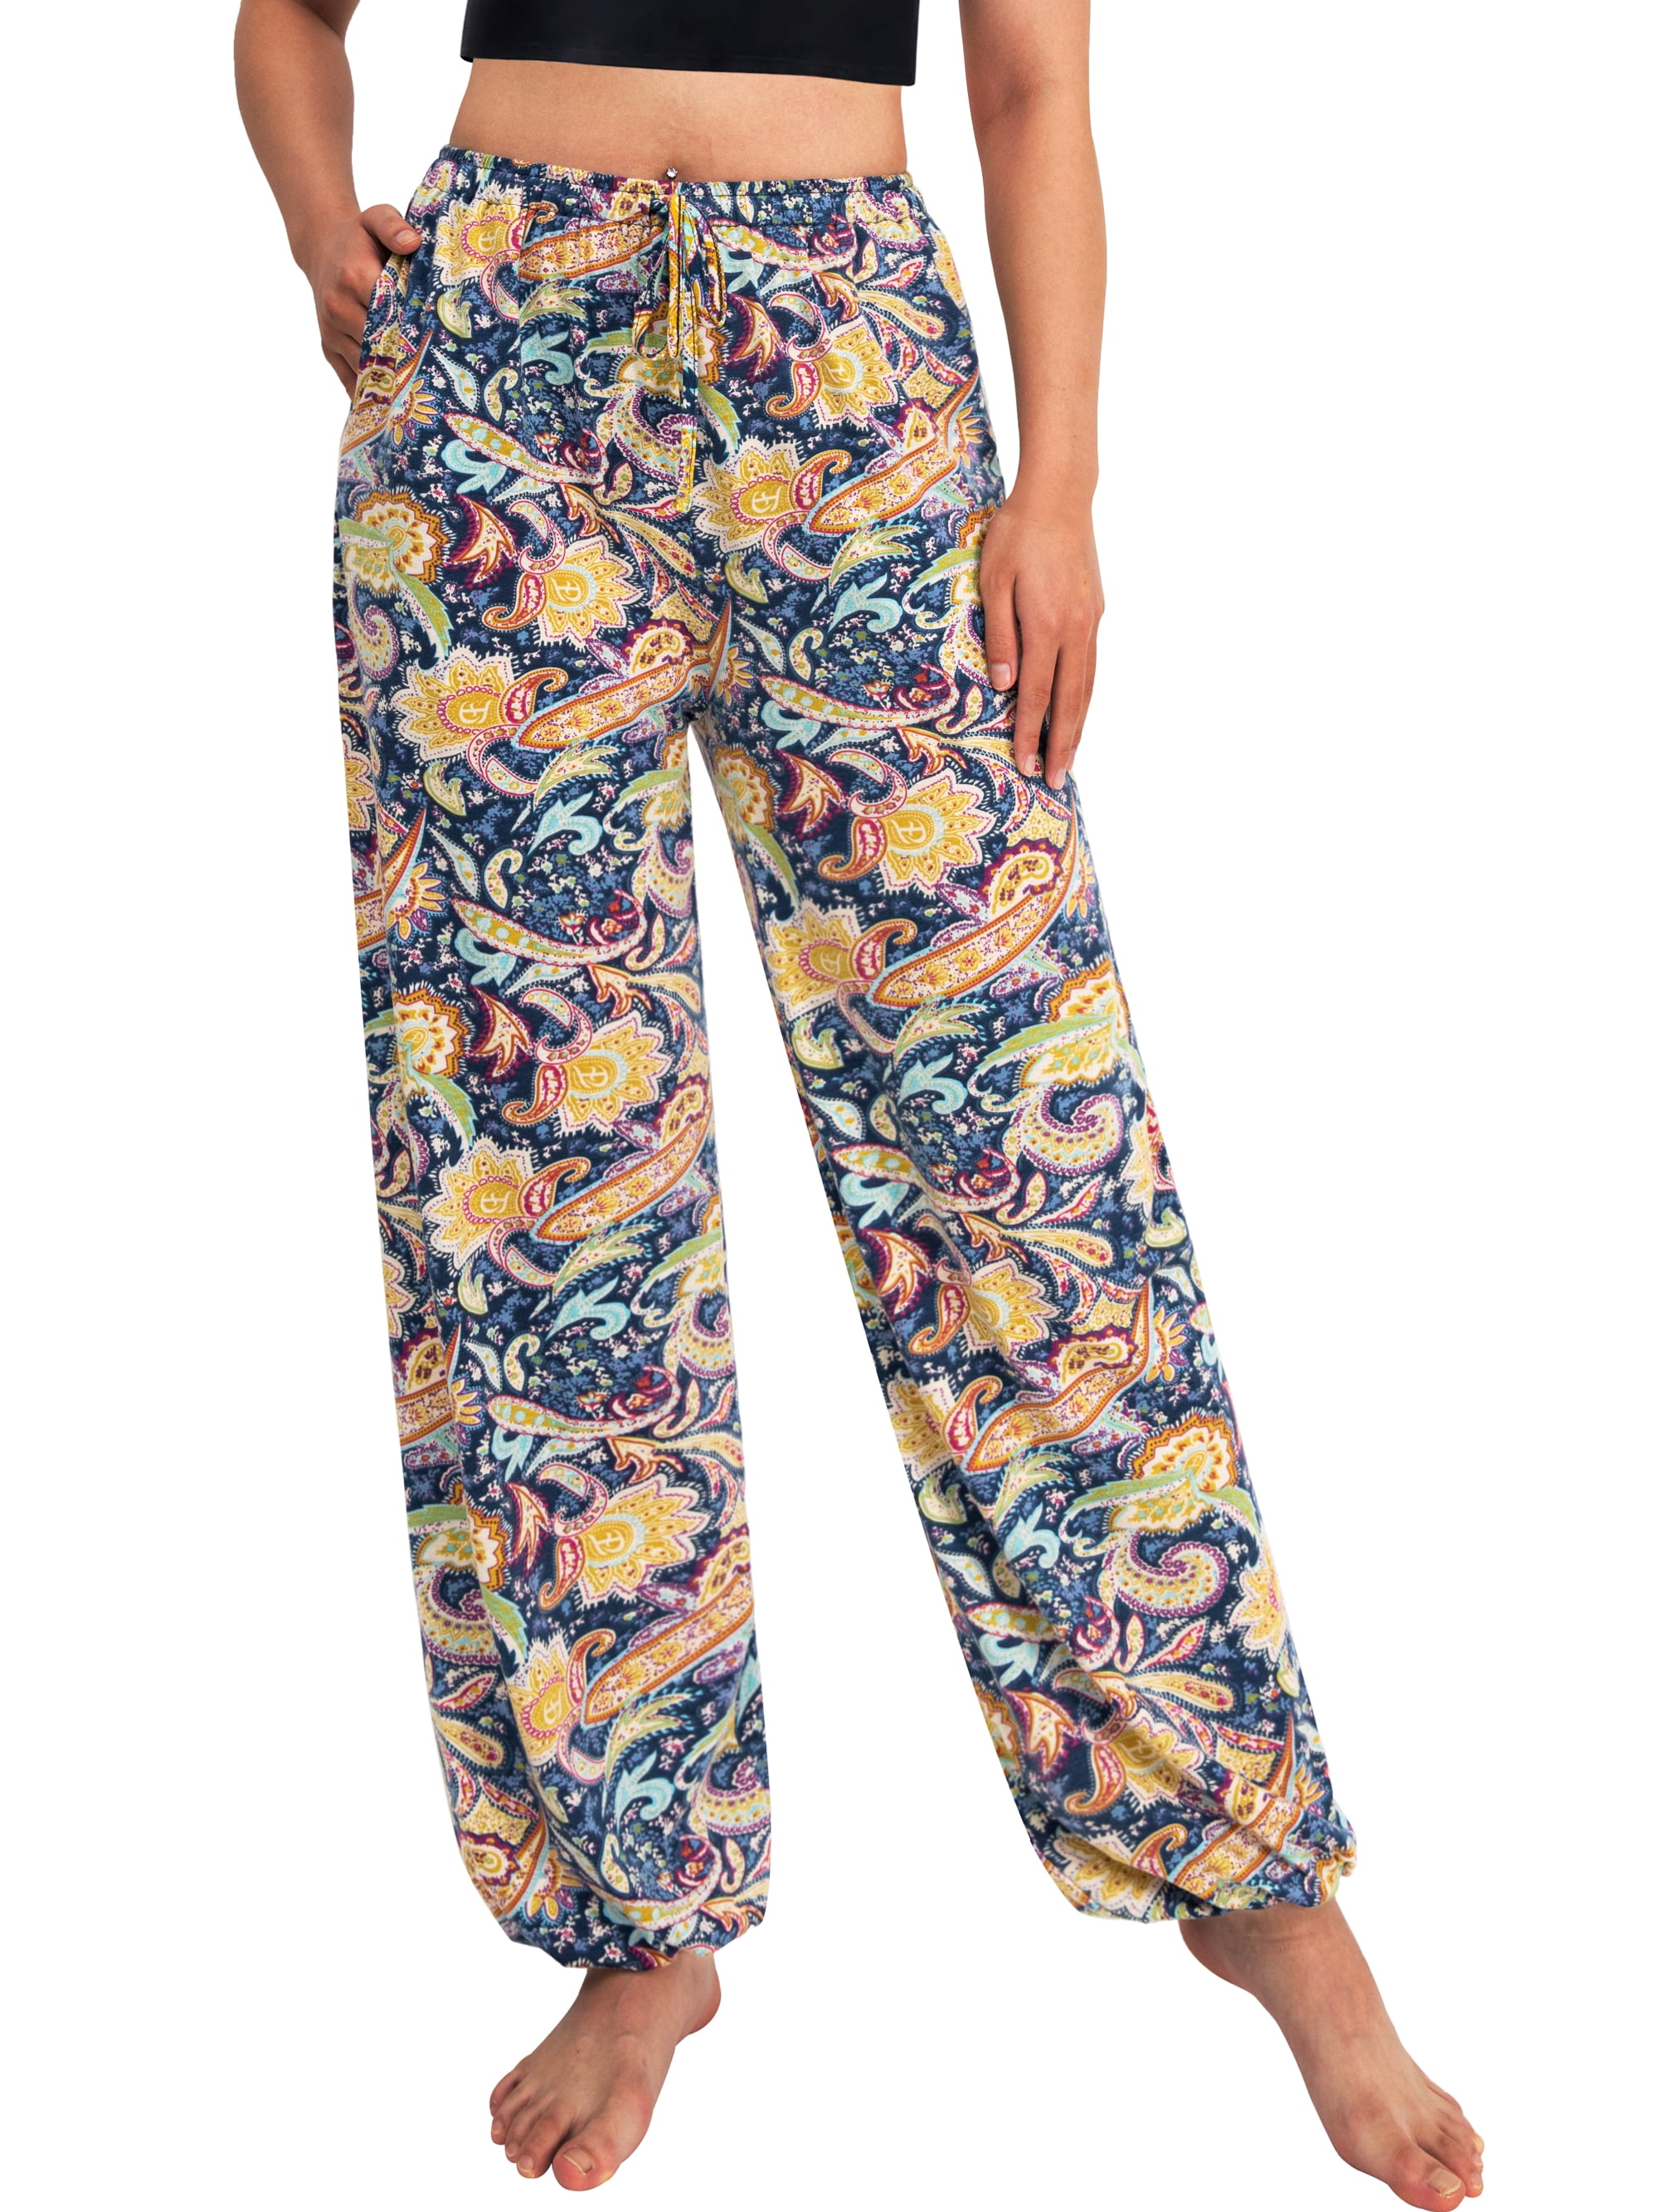 OmicGot Women's Casual Boho Palazzo Lounge Pants Yoga Pants m-2xl ...